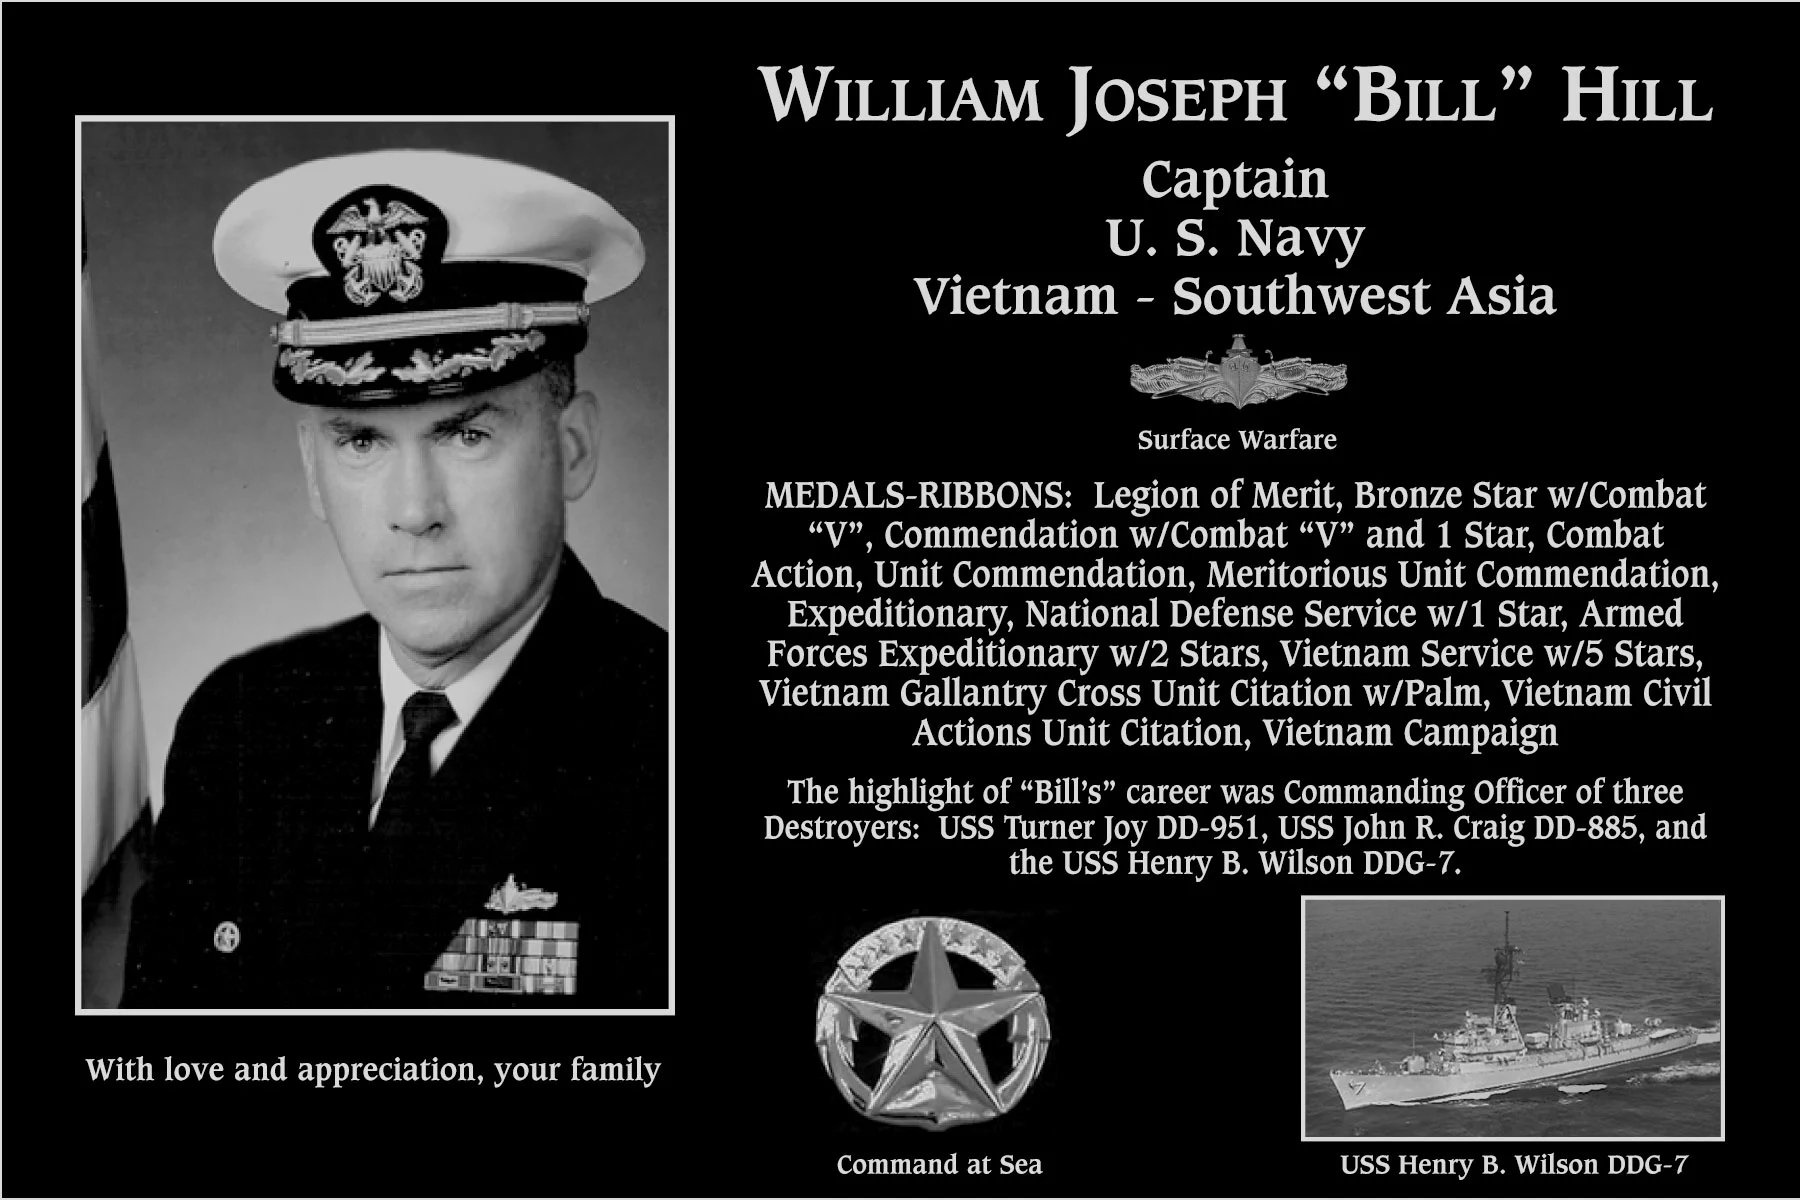 William Joseph “Bill” Hill